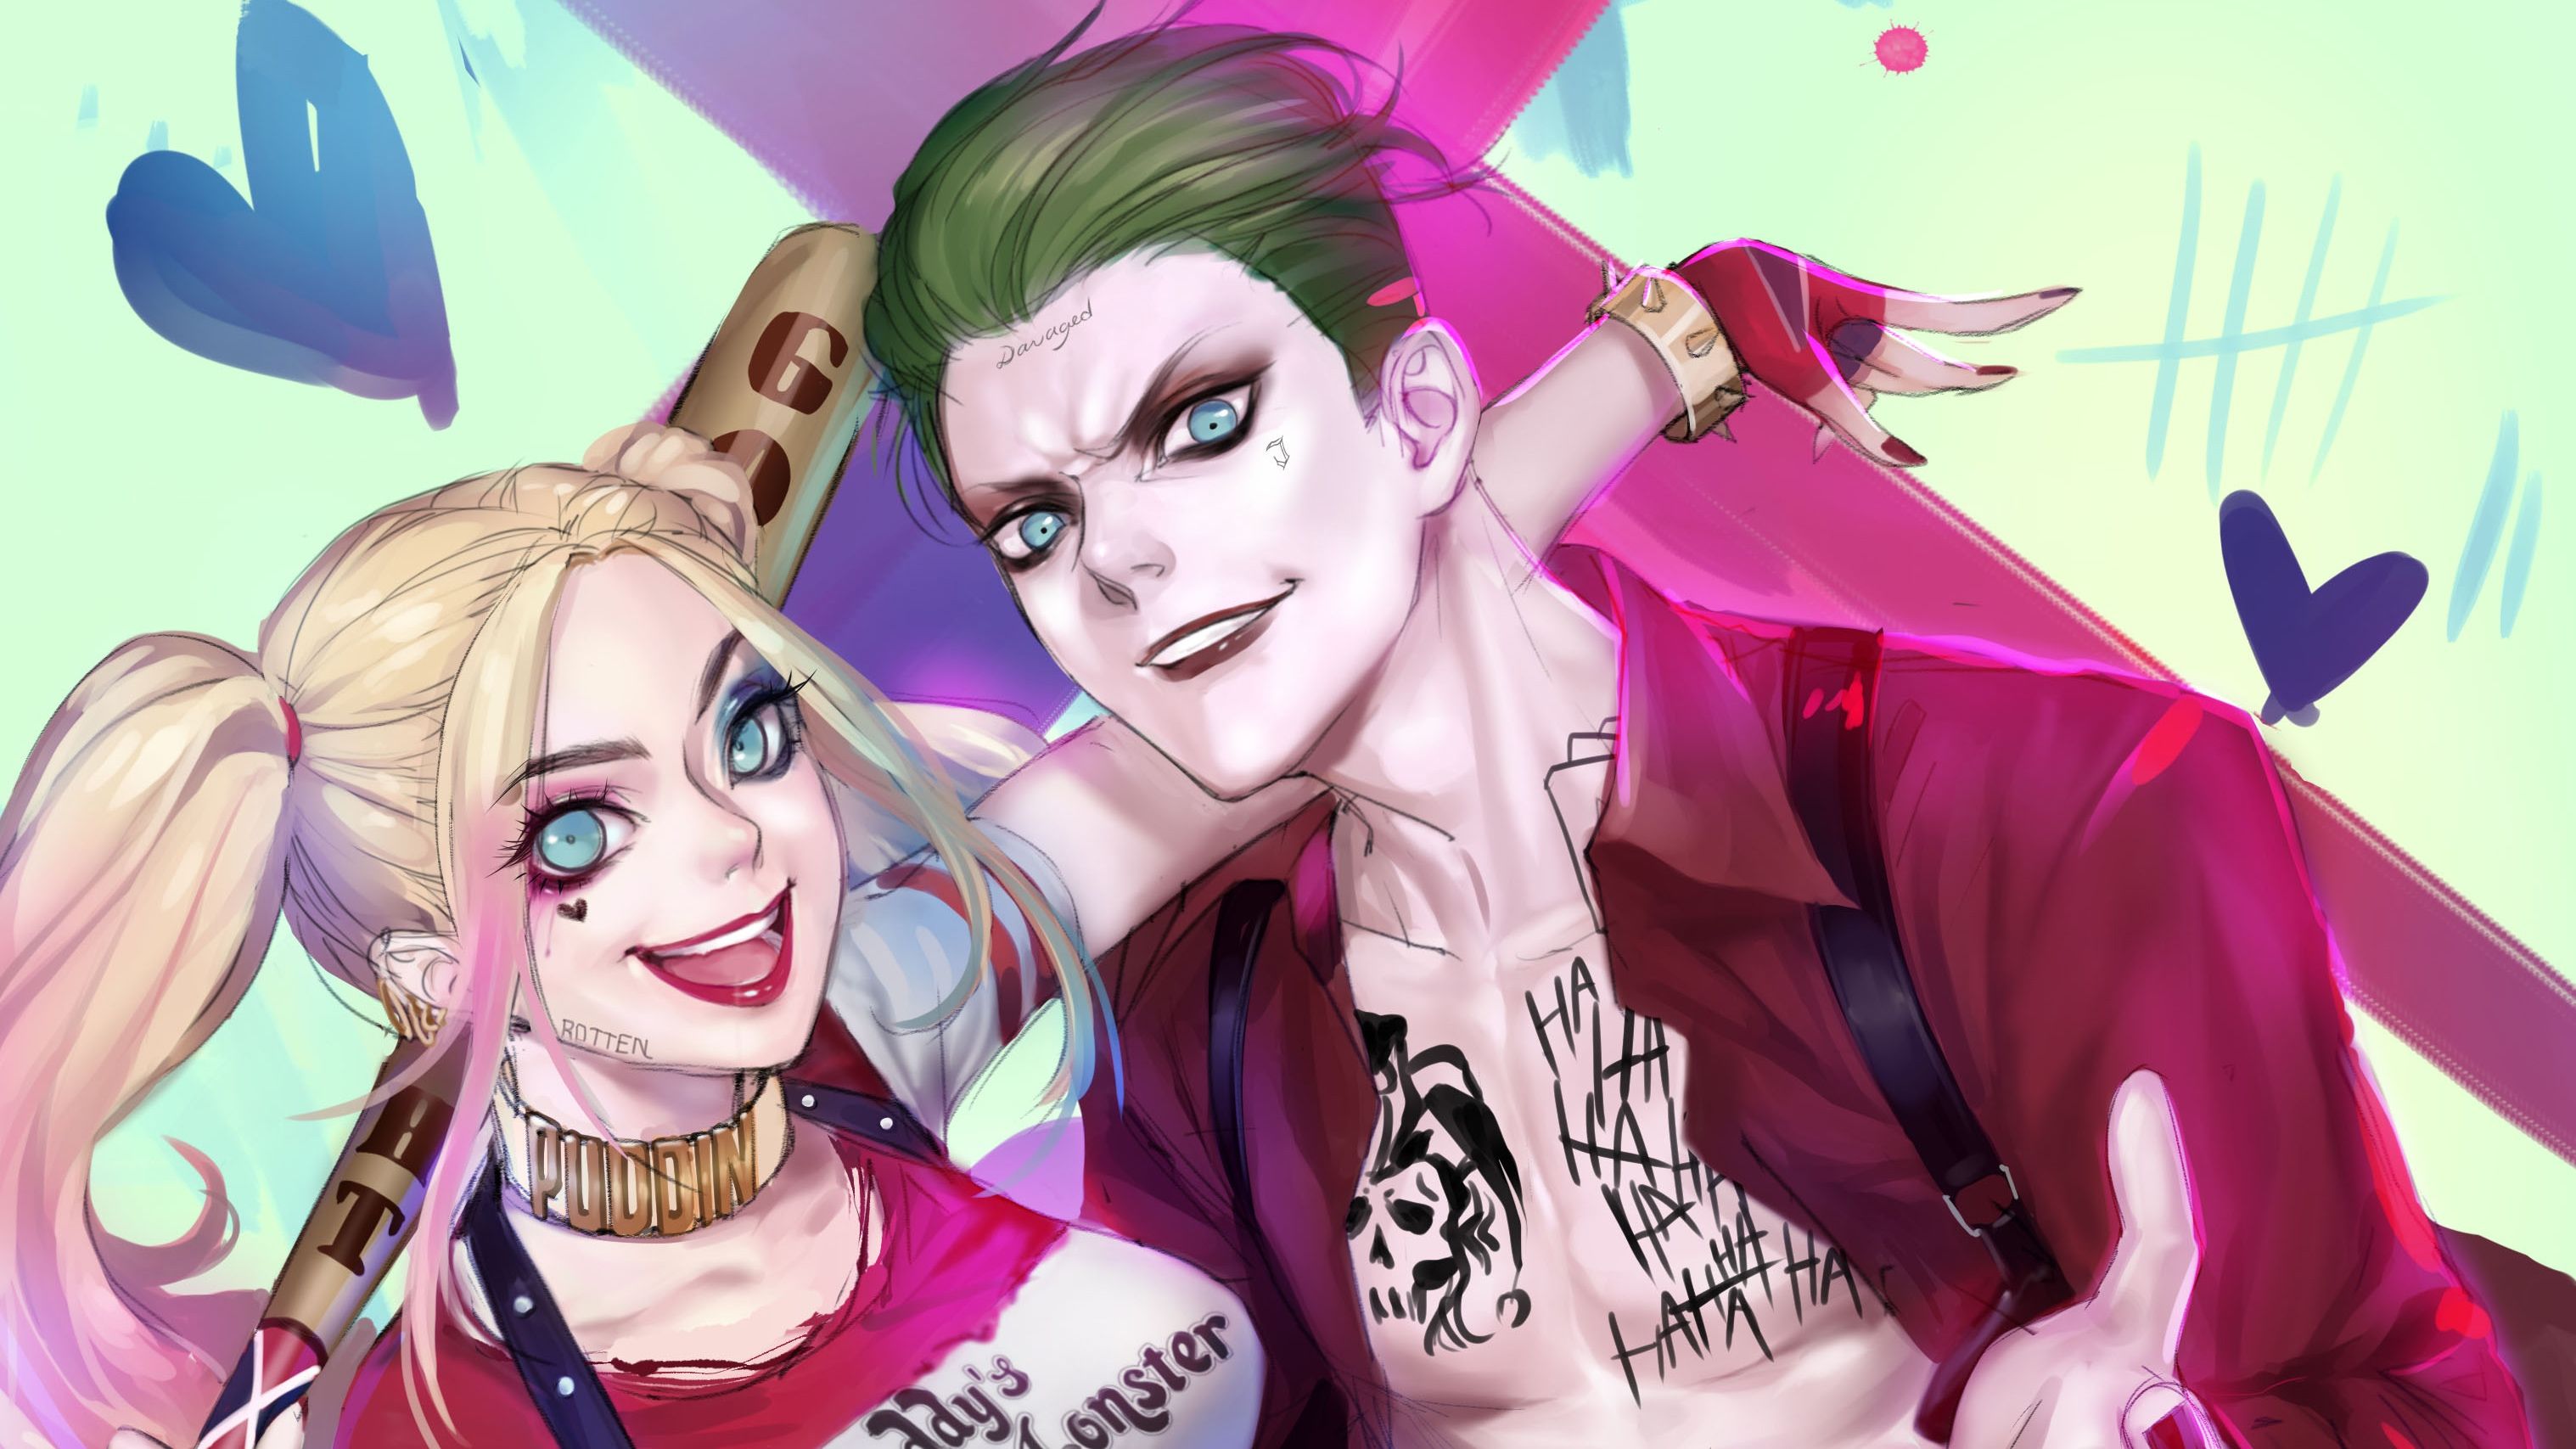 Cute Harley Quinn and Joker.